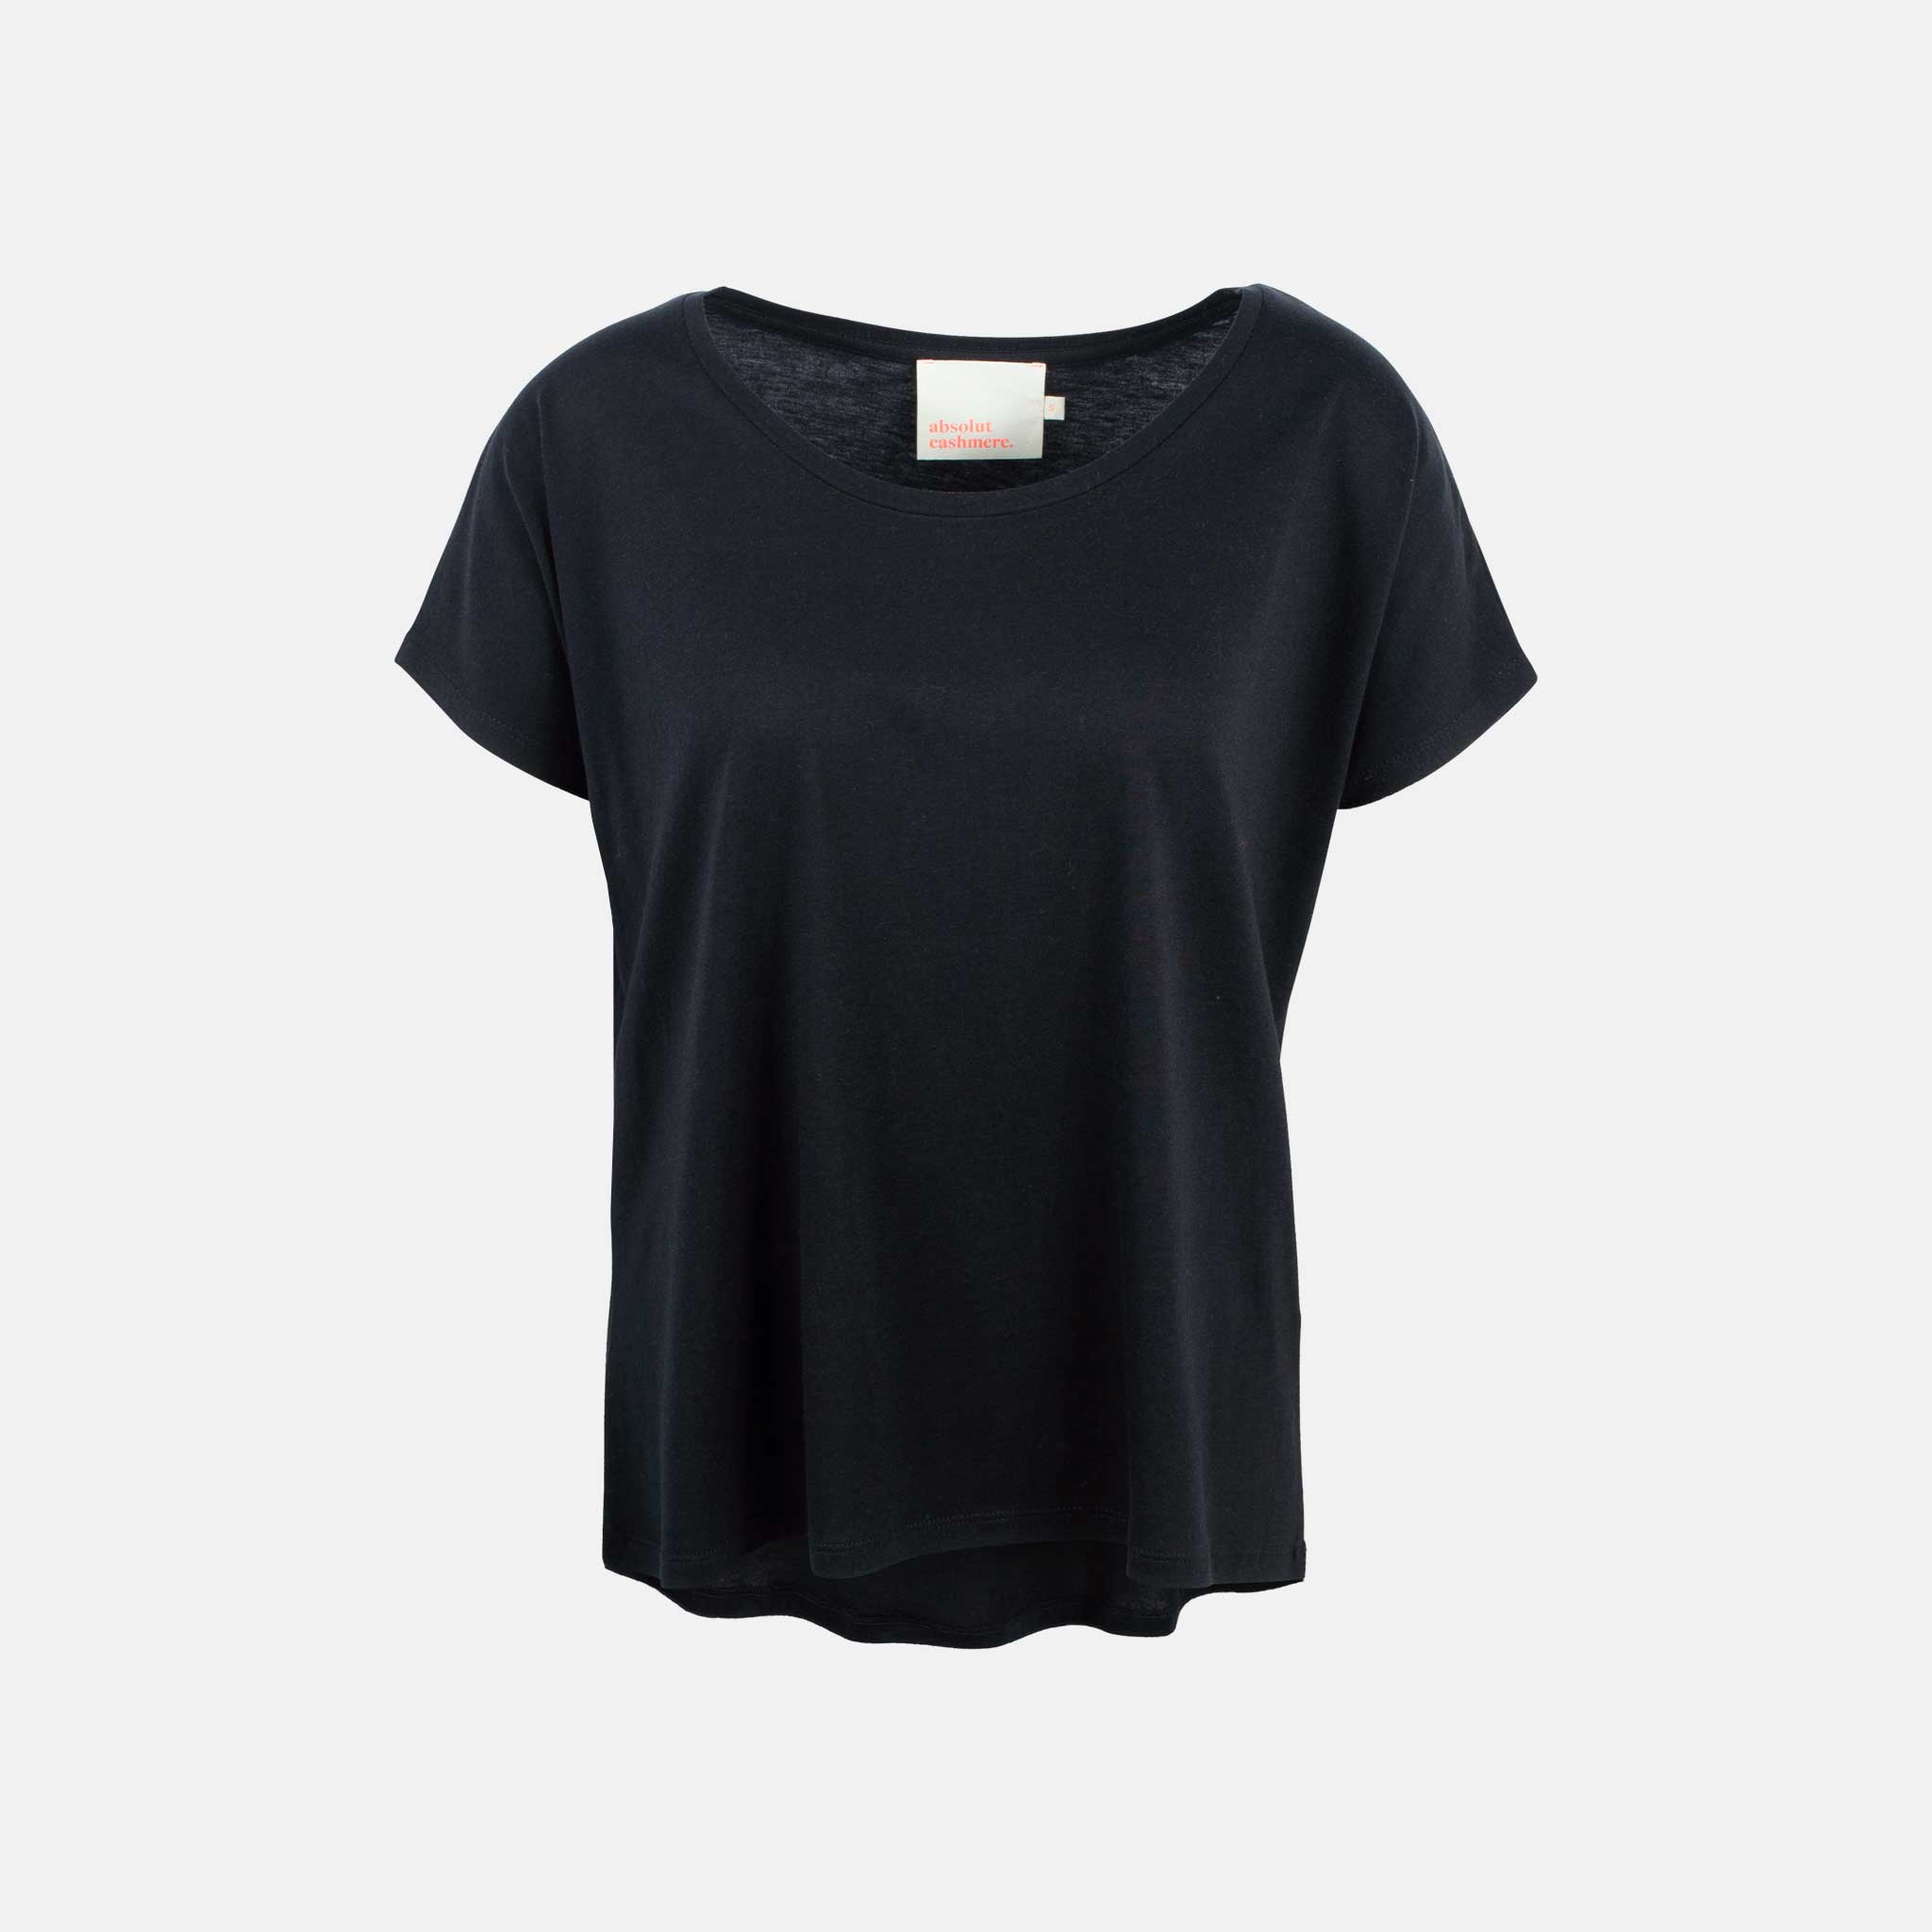 Absolut Cashmere Shirt Elise vorne | schwarz